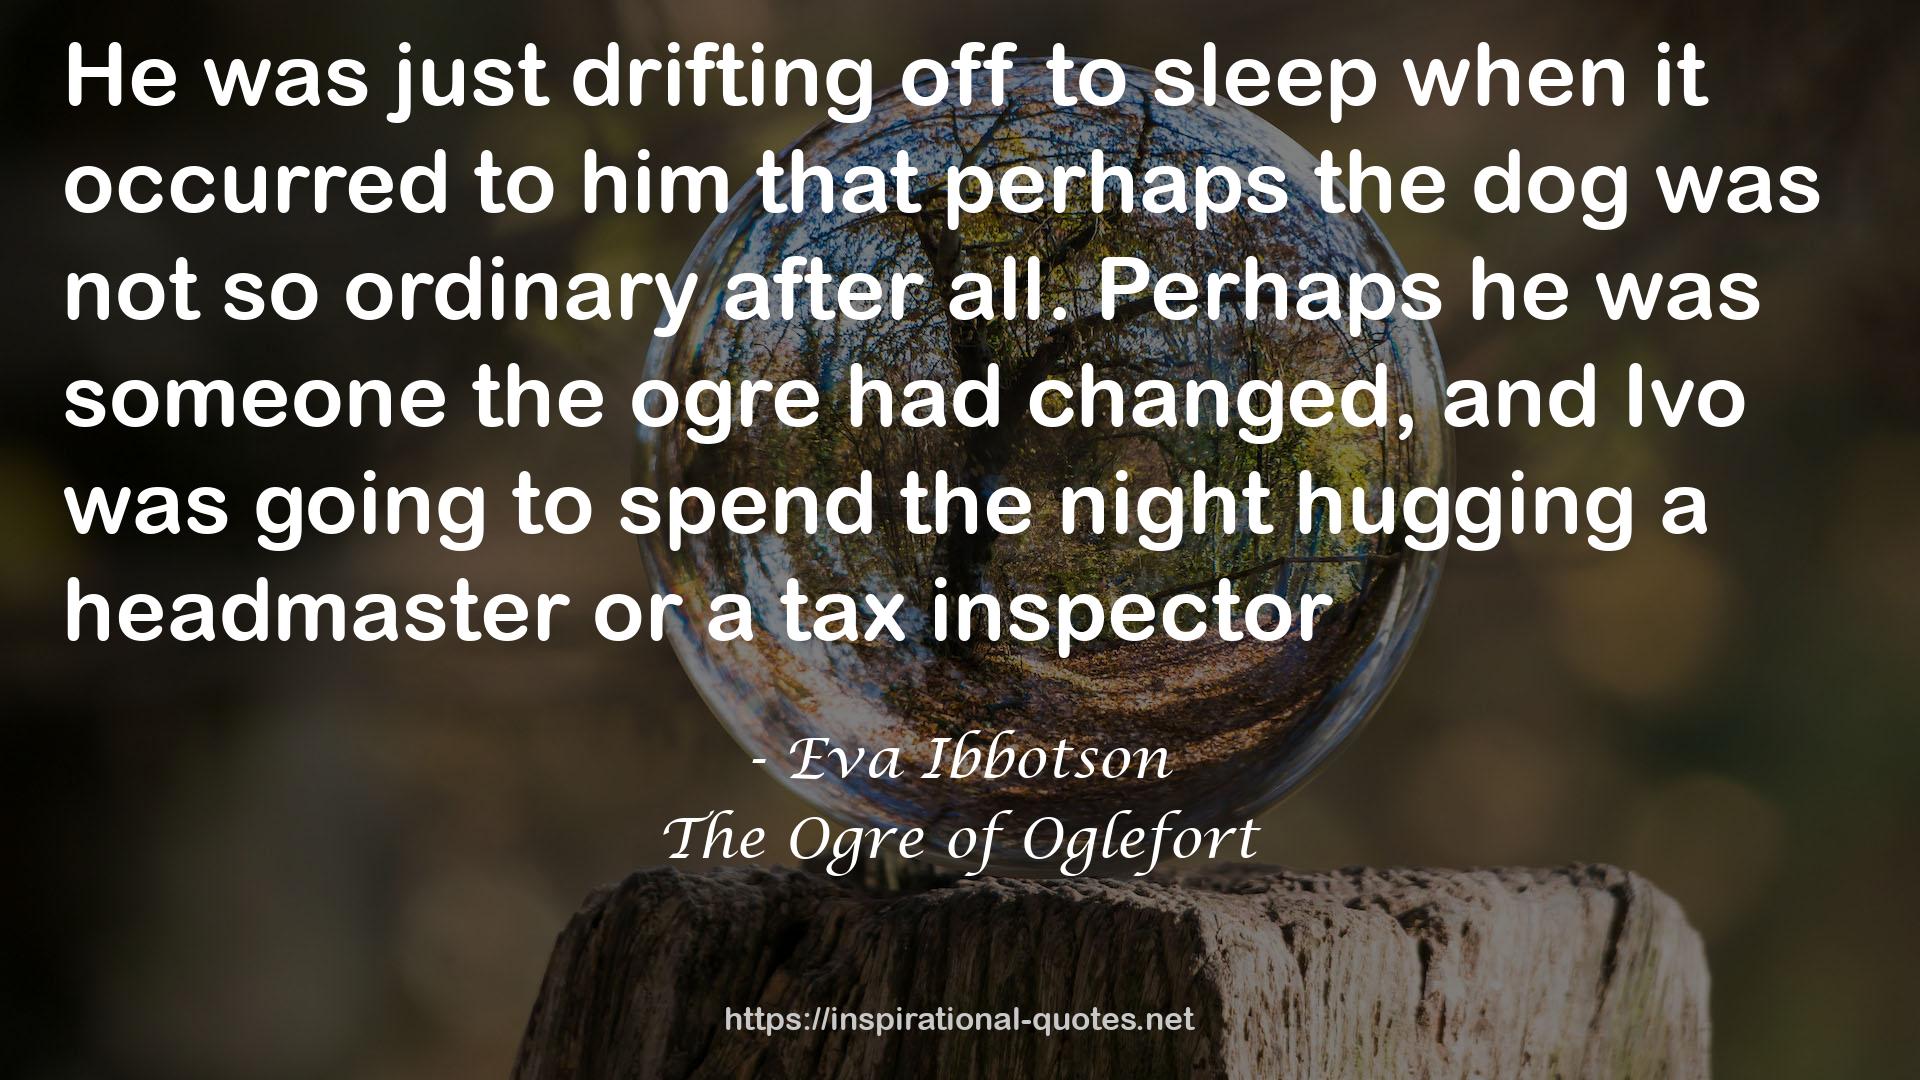 The Ogre of Oglefort QUOTES